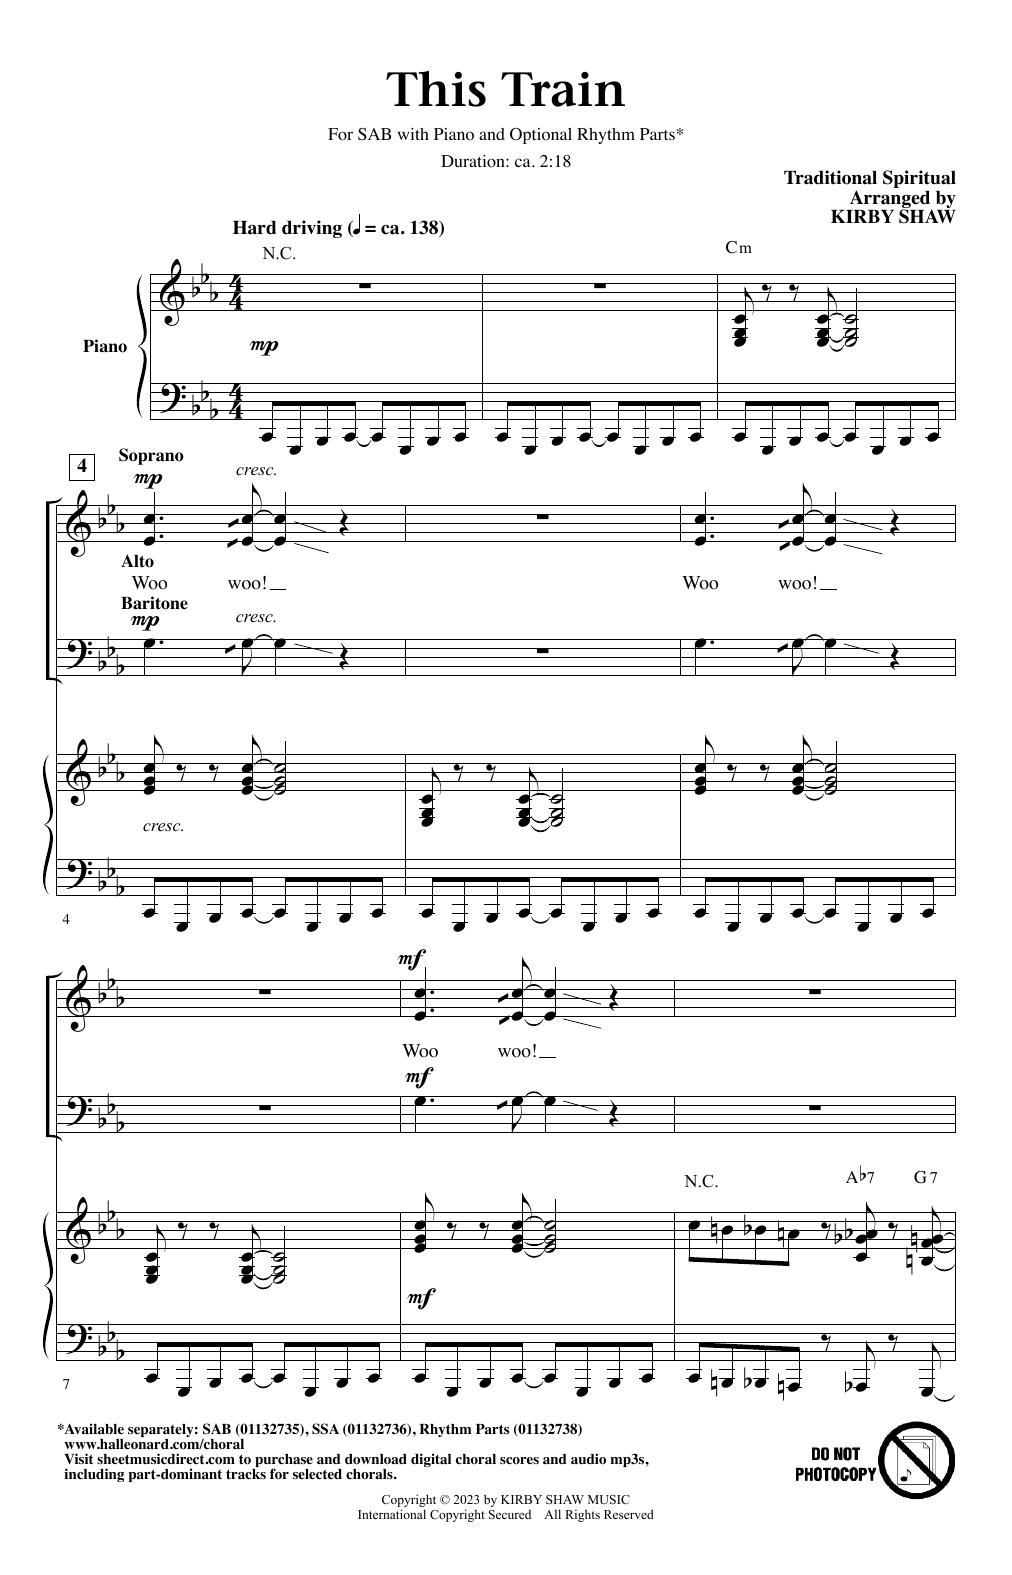 Traditional Spiritual This Train (arr. Kirby Shaw) Sheet Music Notes & Chords for SAB Choir - Download or Print PDF